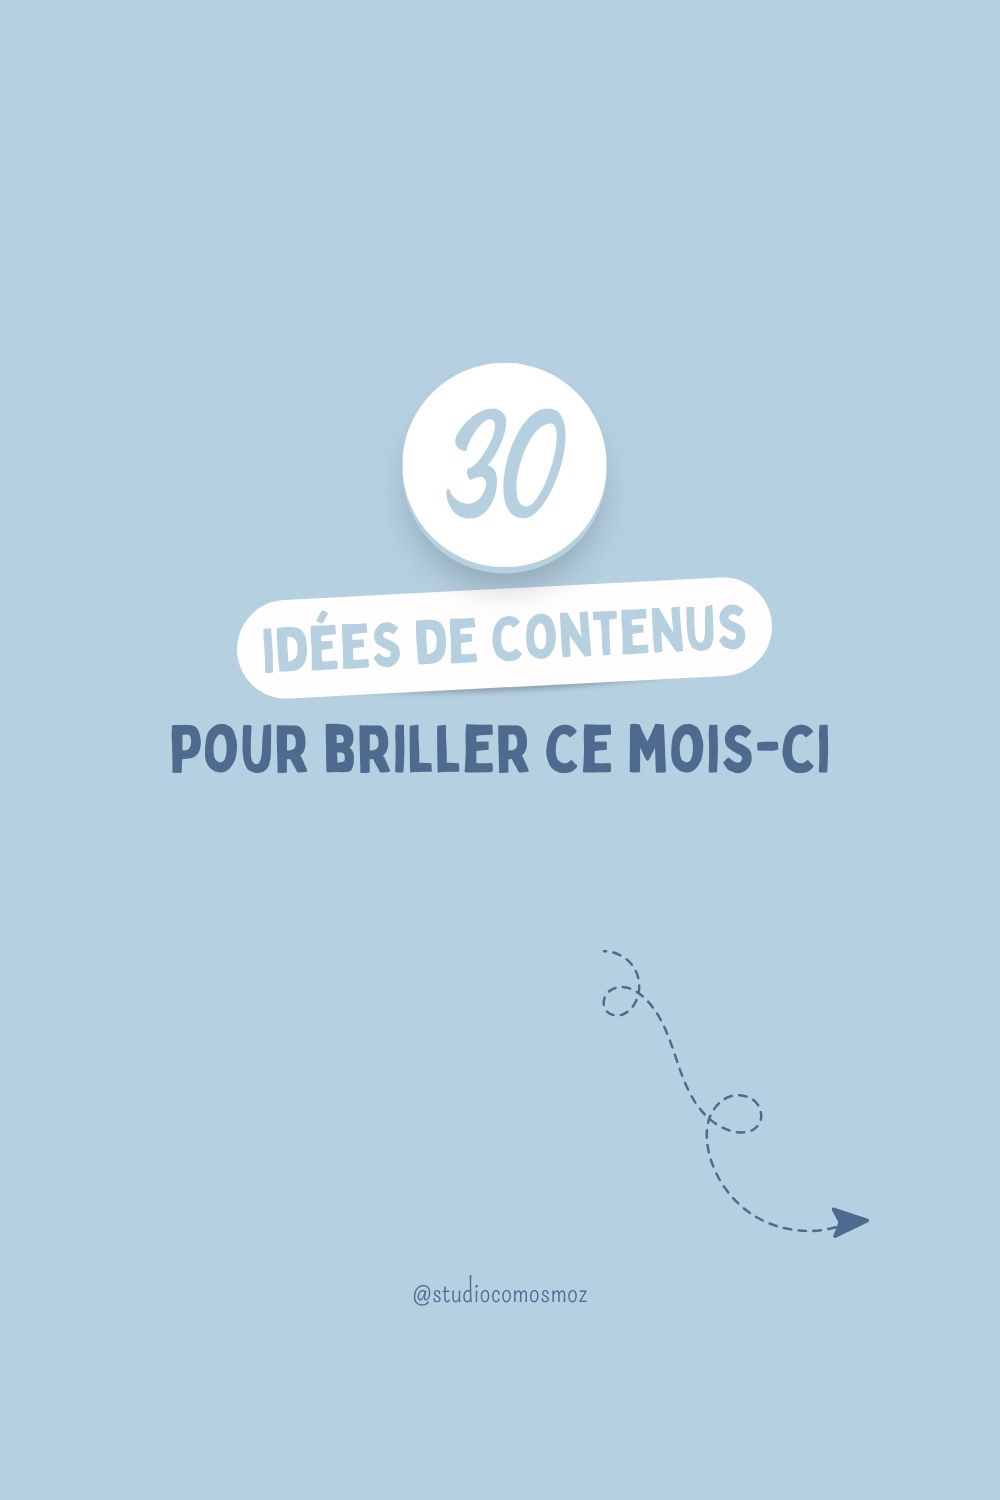 30 idées de contenus